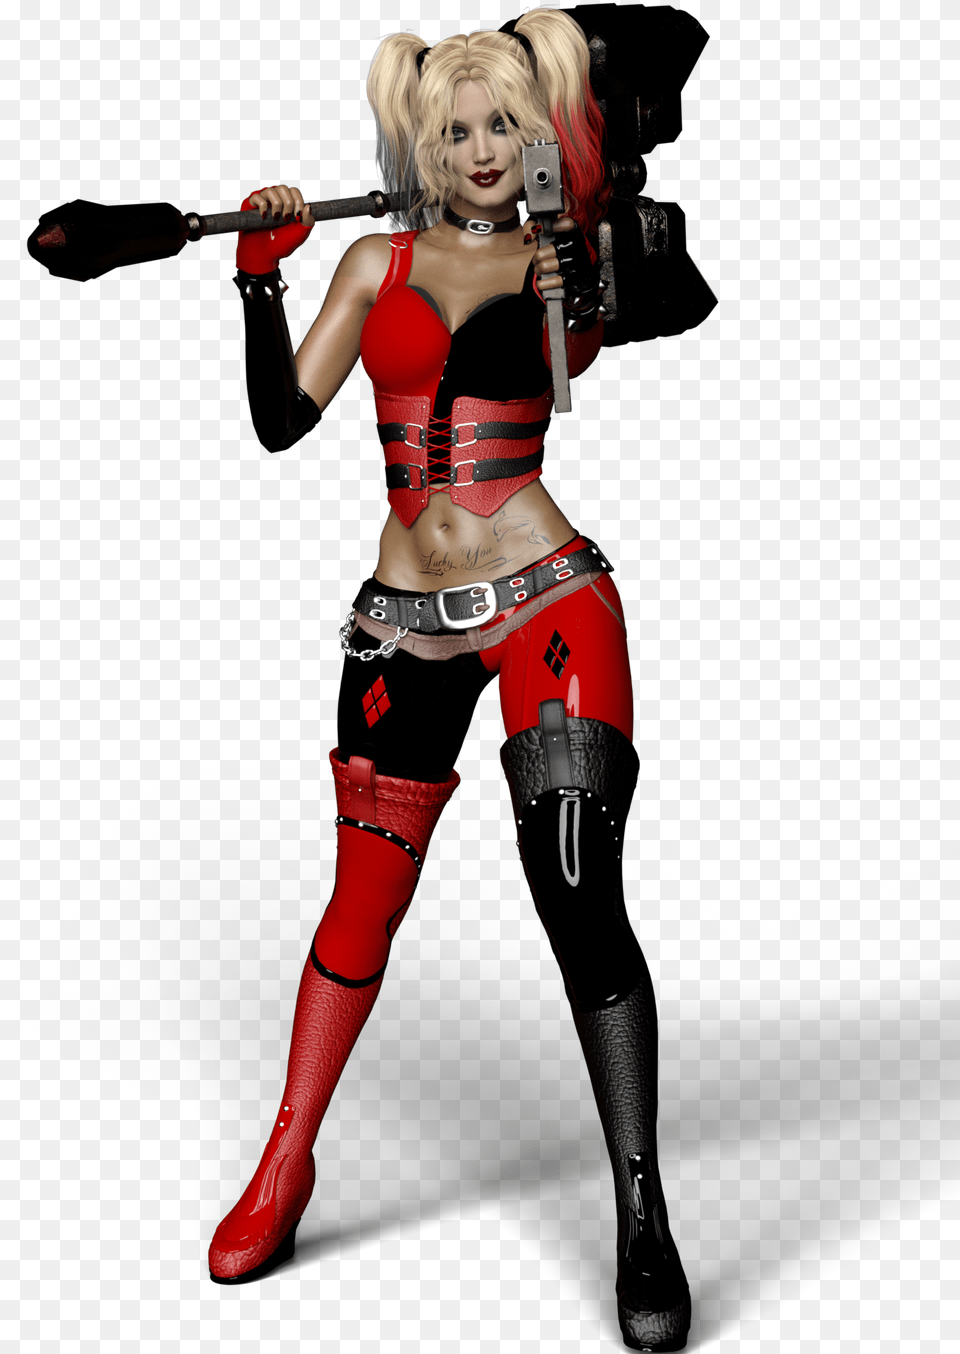 Harley Quinn Latex 3d Harley Quinn 3d Art, Clothing, Weapon, Costume, Sword Png Image